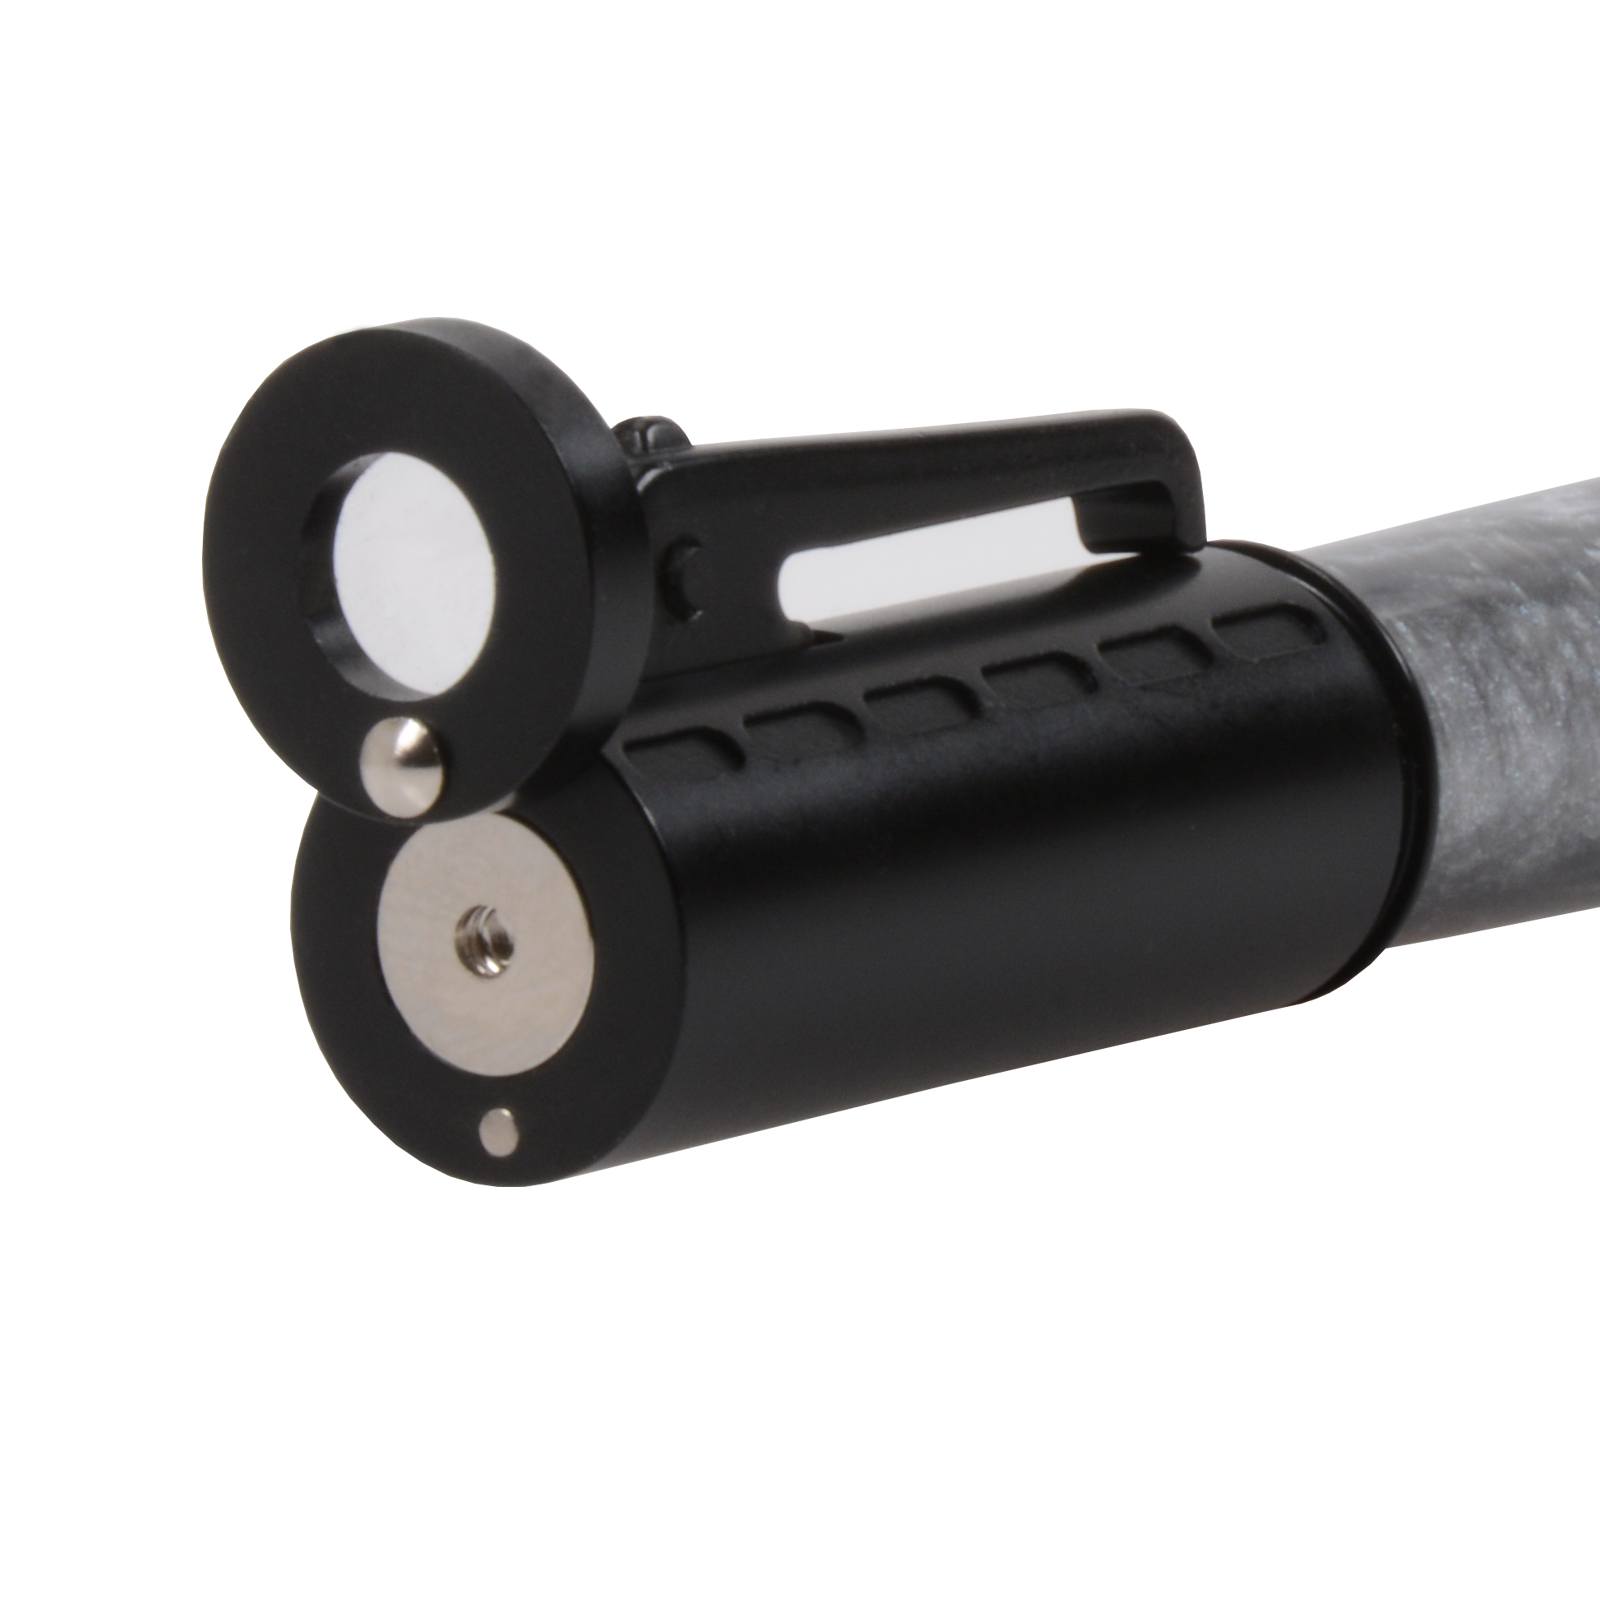 Fidget Gun Metal Twist Pen Kit at Penn State Industries